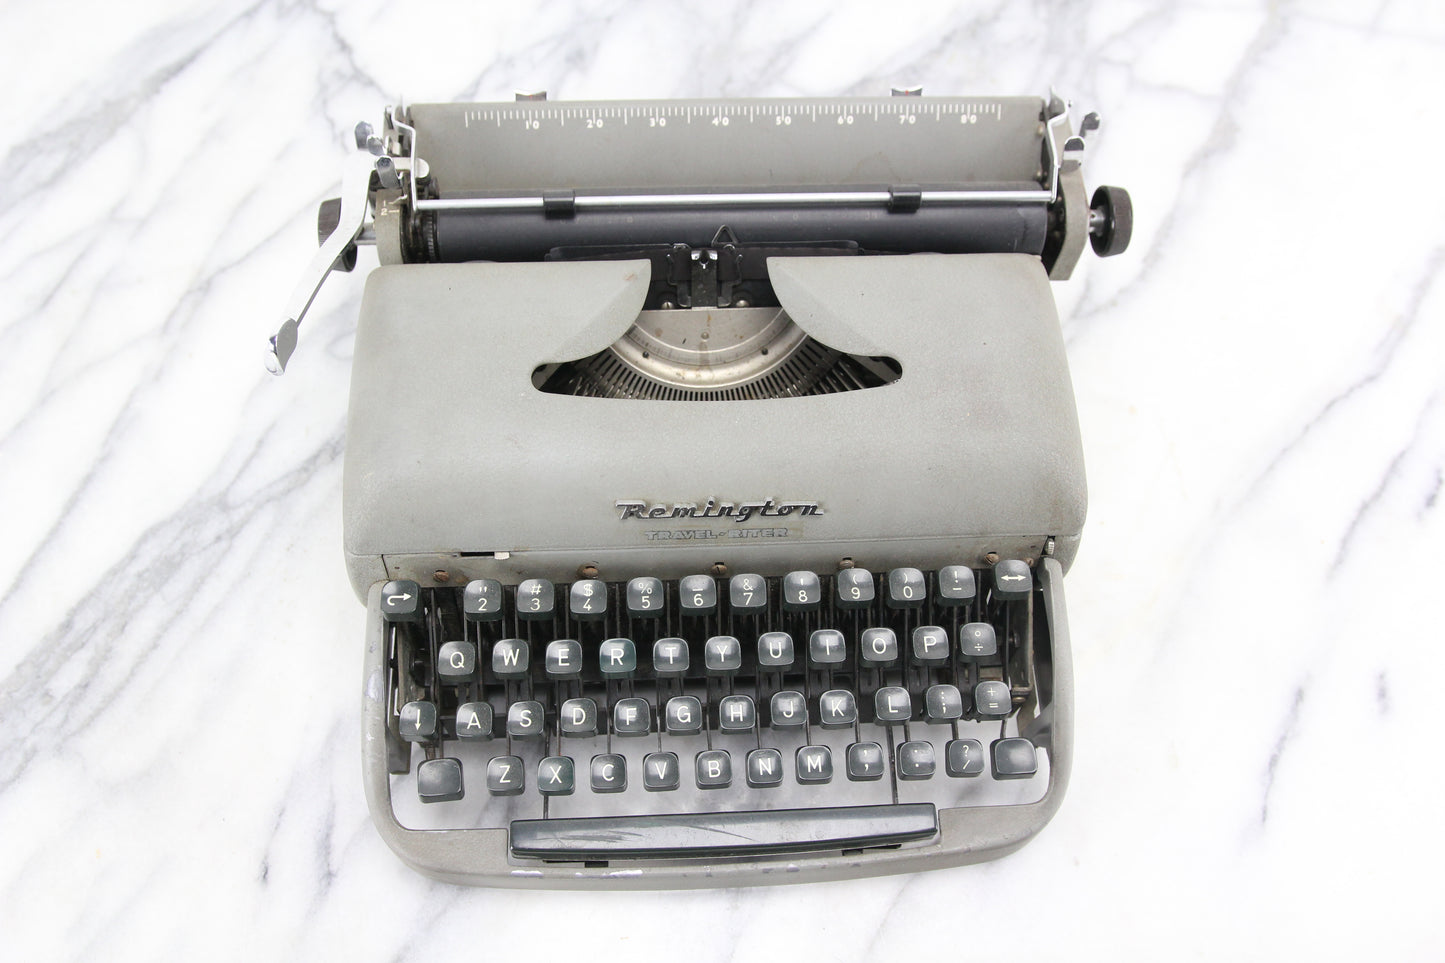 Remington Travel-Riter Portable Typewriter with Case, Made in Holland, 1957